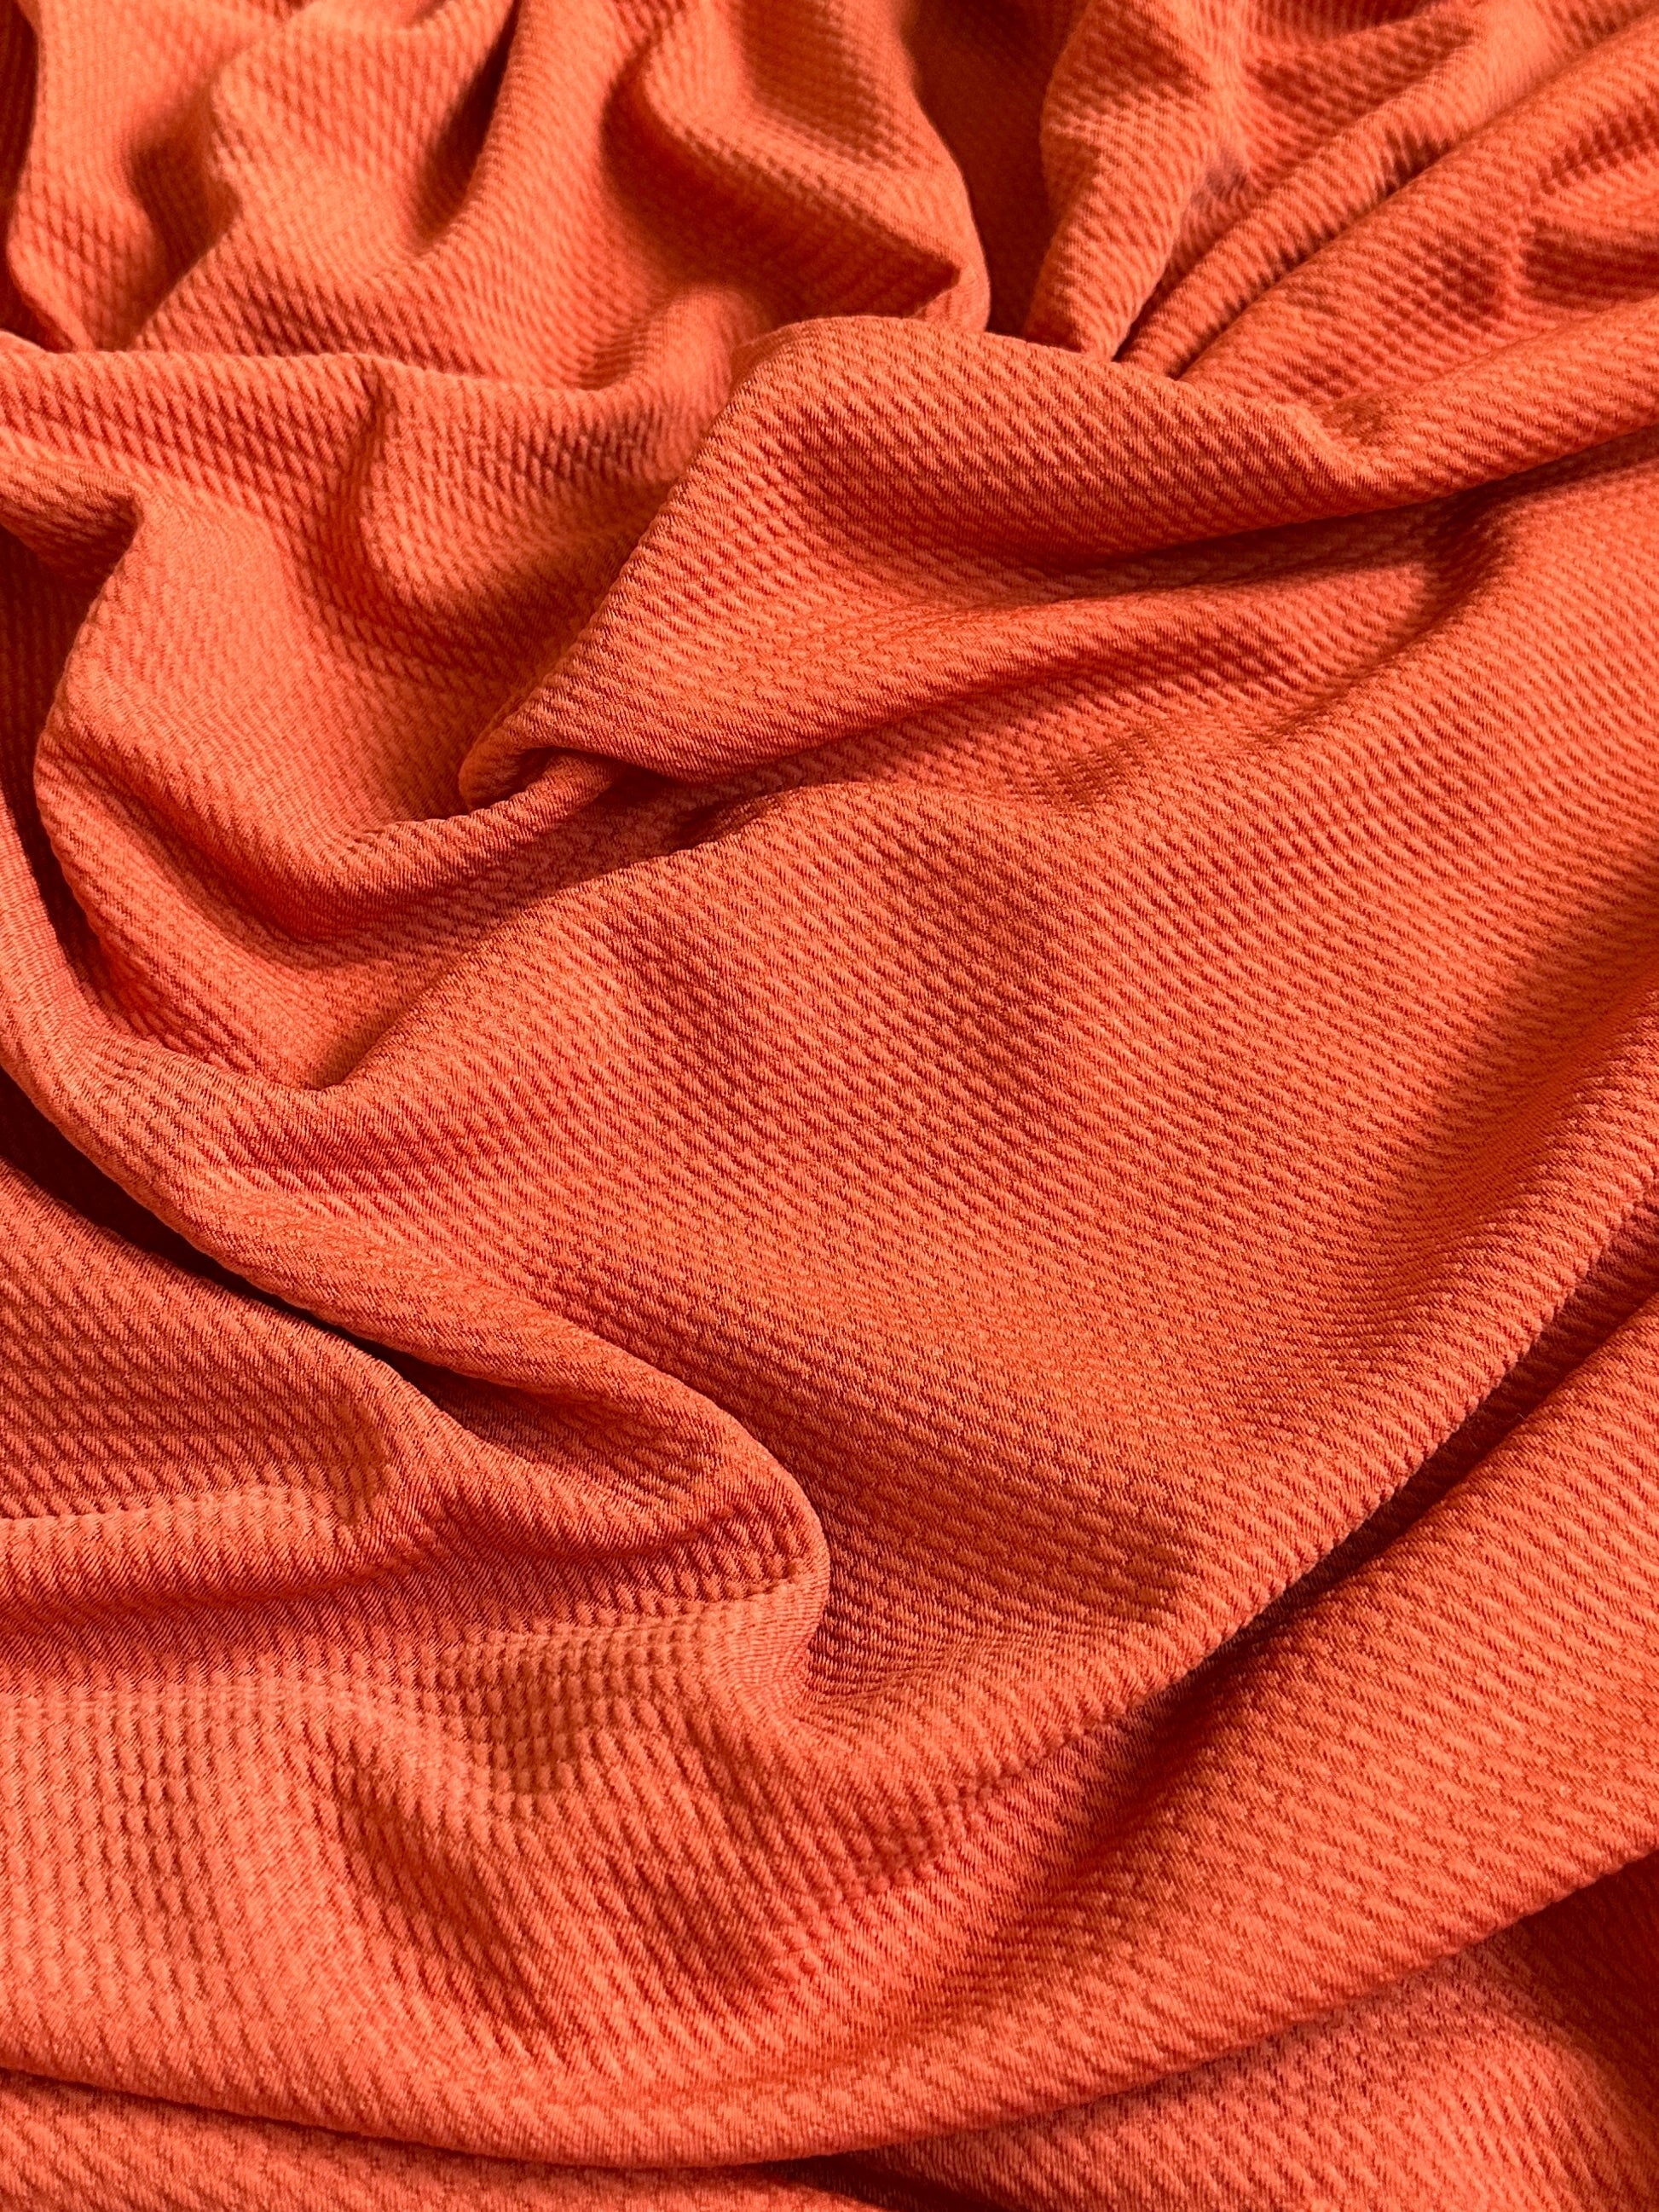 orange liverpool knit, dark orange liverpool knit, light orange liverpool knit, knit for woman, knit for bride, knit on discount, knit on sale, knit for gown, liverpool knit for party wear, premium liverpool knit, kiki textile liverpool knit